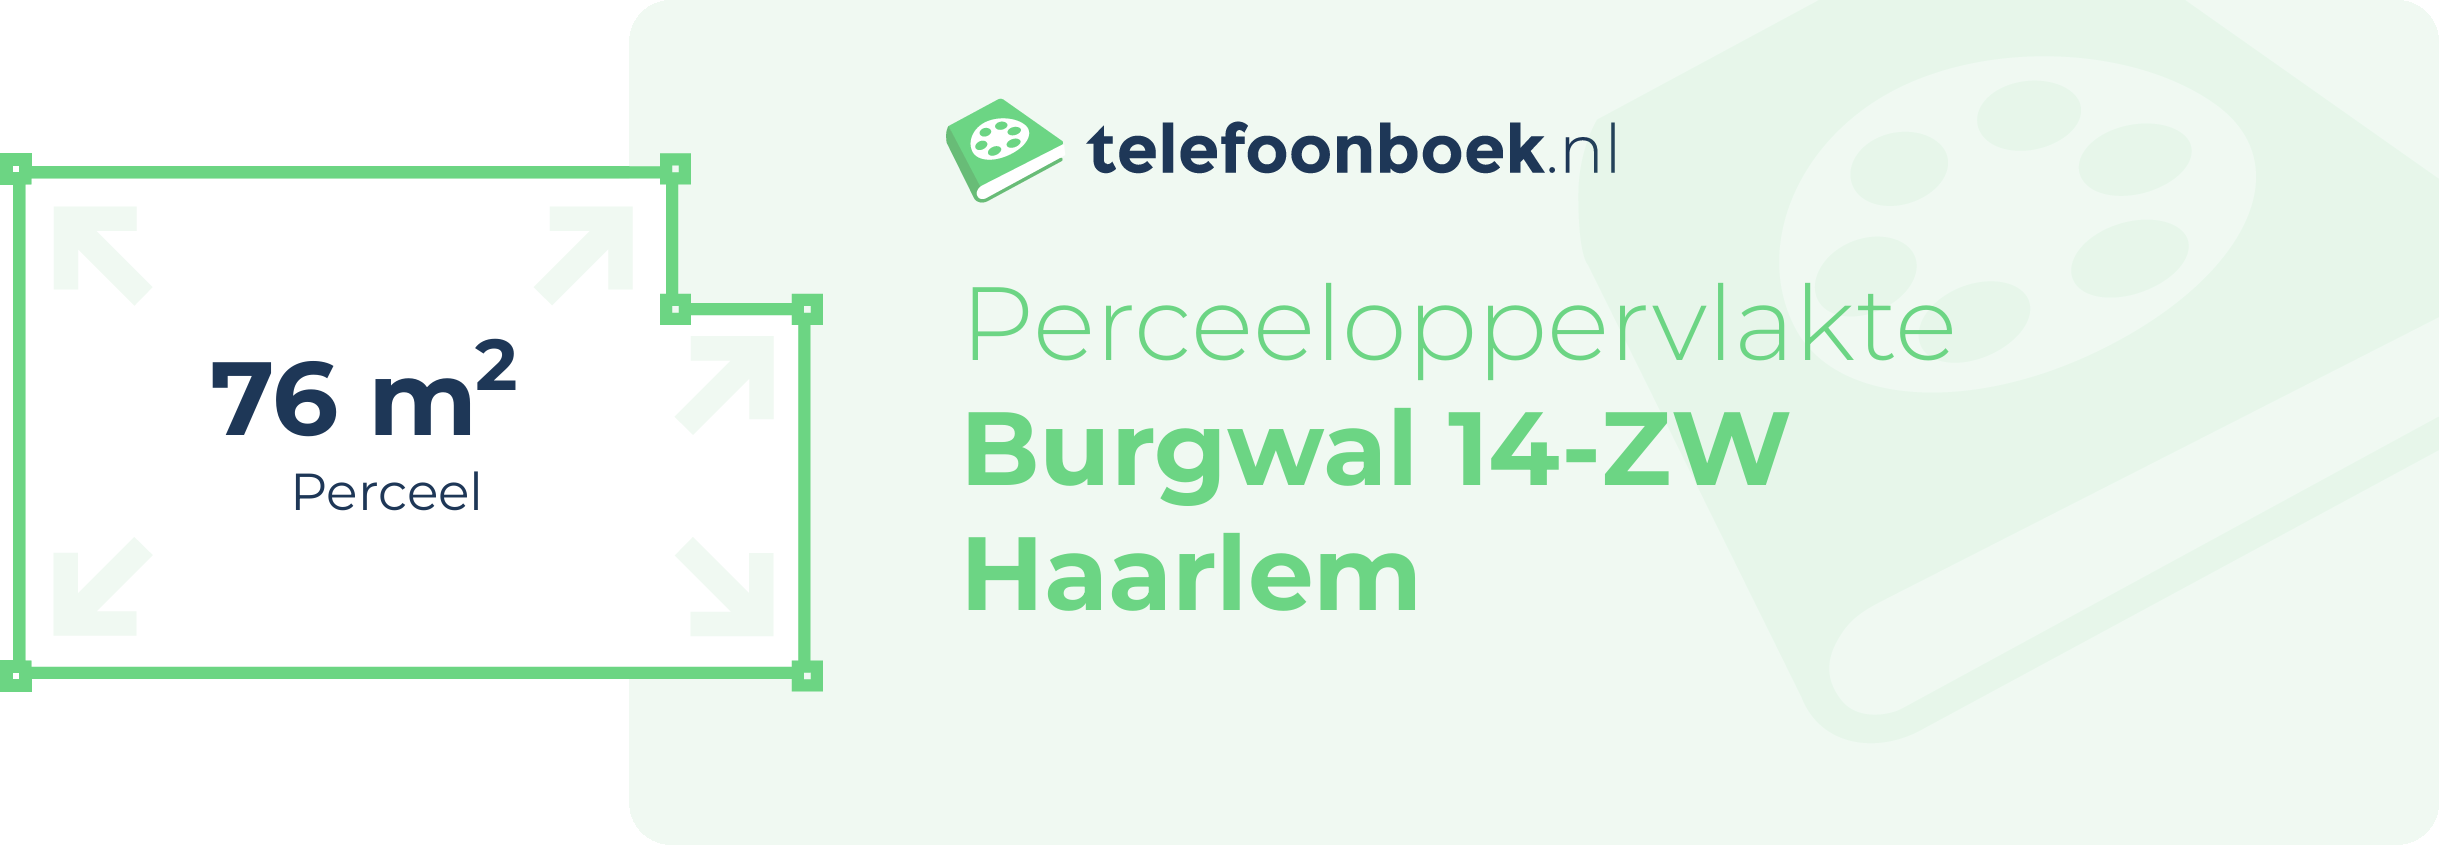 Perceeloppervlakte Burgwal 14-ZW Haarlem